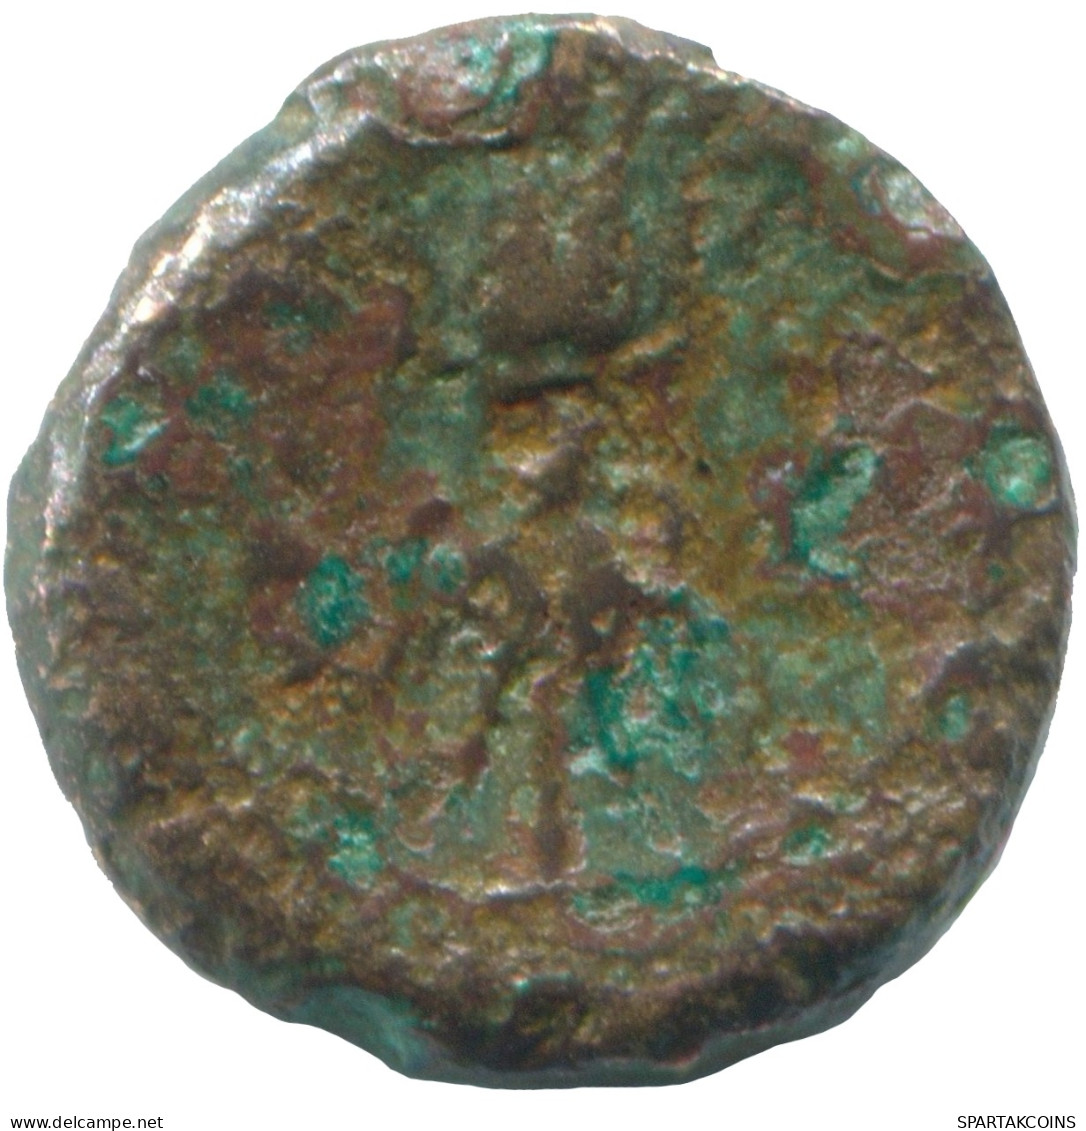 Antike Authentische Original GRIECHISCHE Münze #ANC12664.6.D.A - Grecques